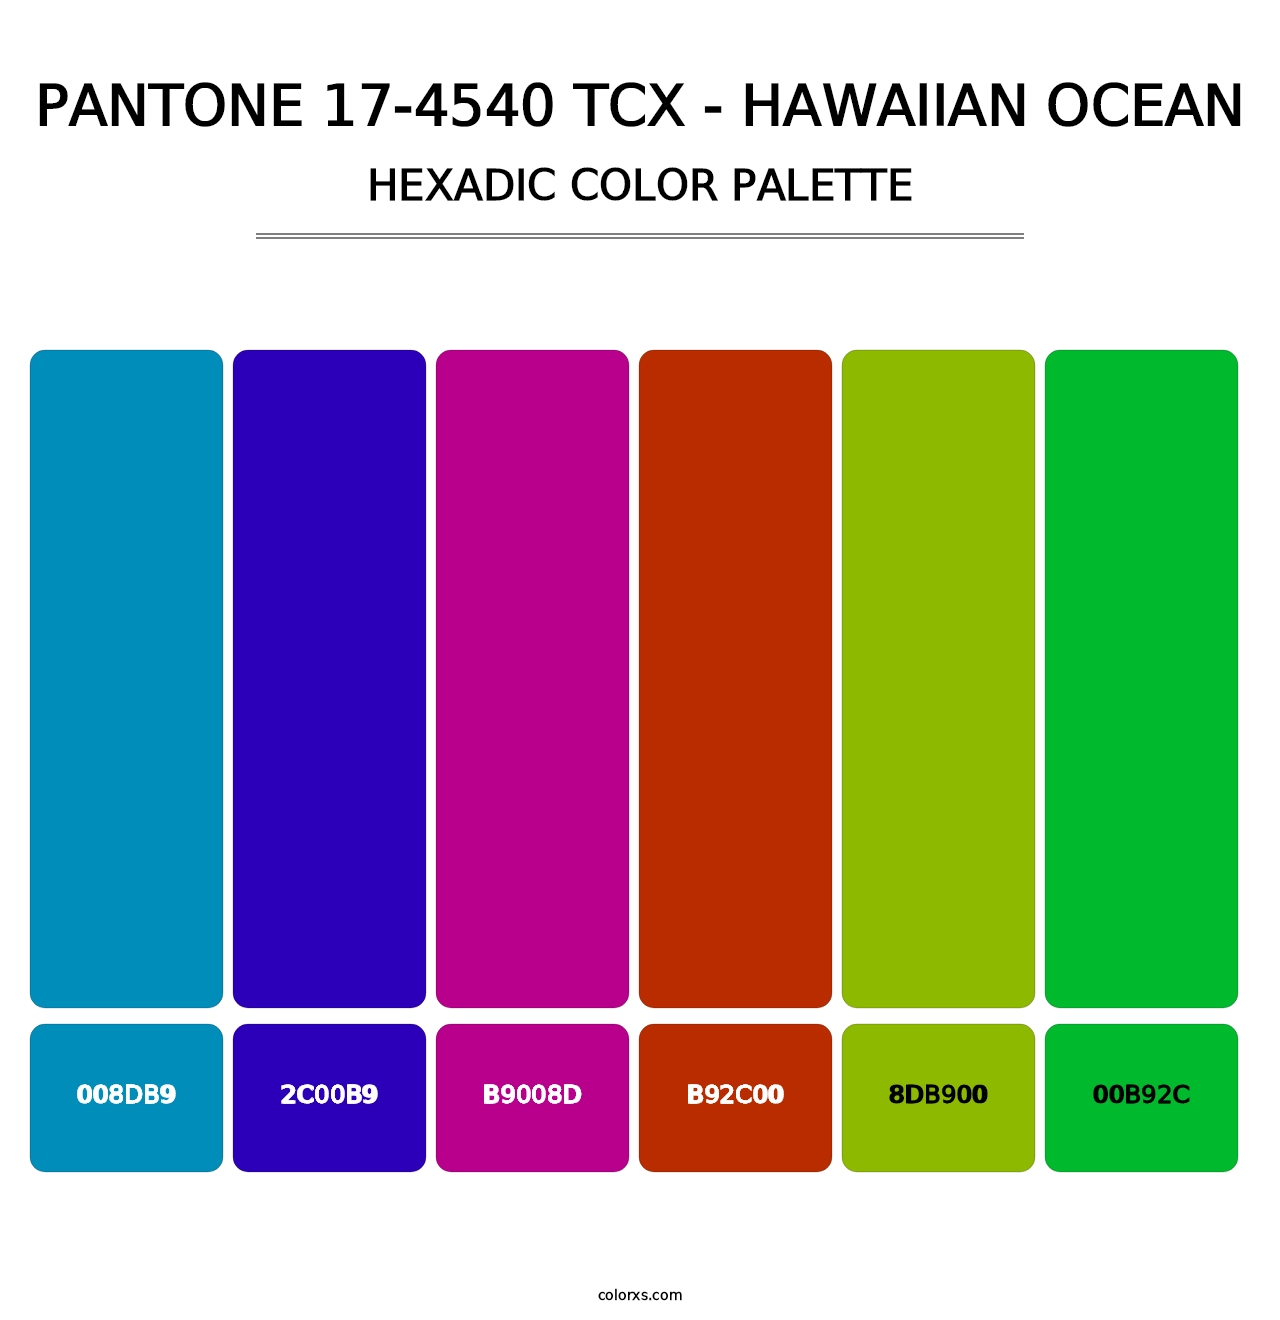 PANTONE 17-4540 TCX - Hawaiian Ocean - Hexadic Color Palette